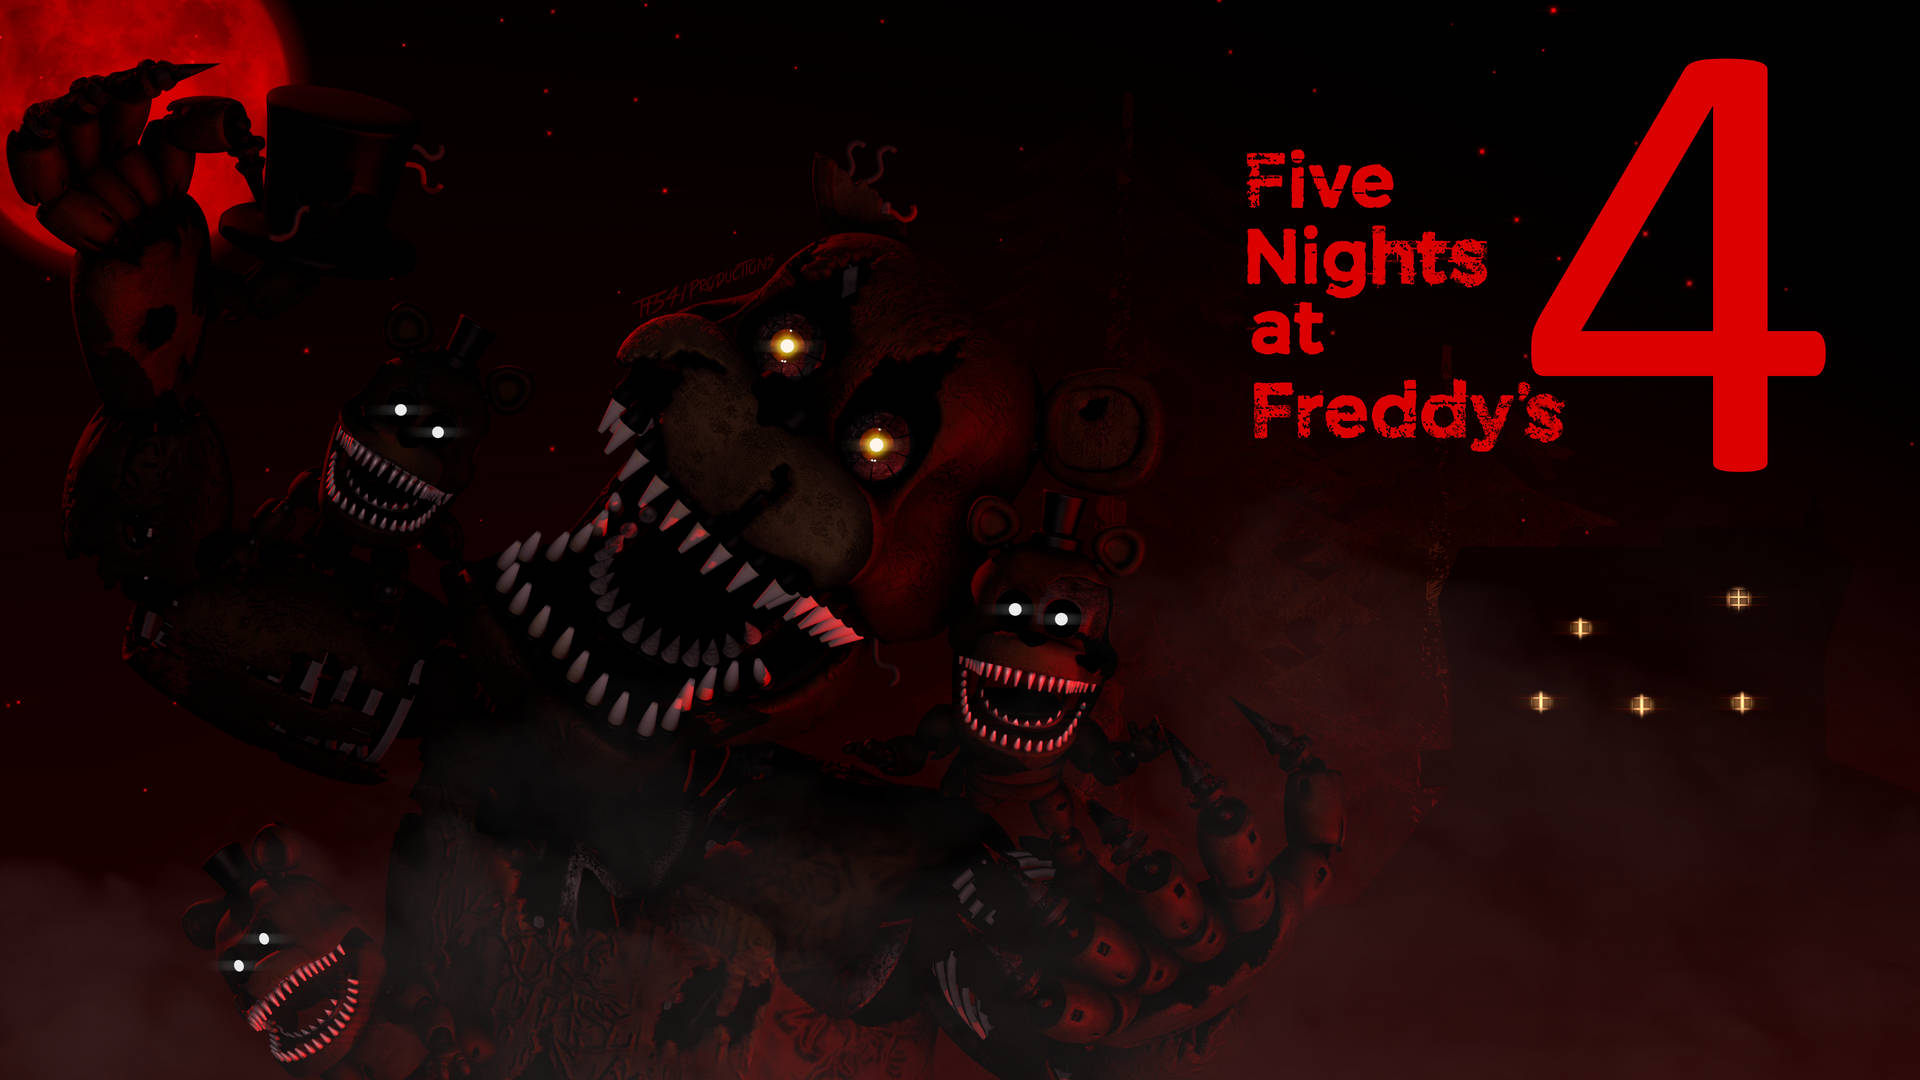 Nightmare Freddy Spooky Freddies Wallpaper